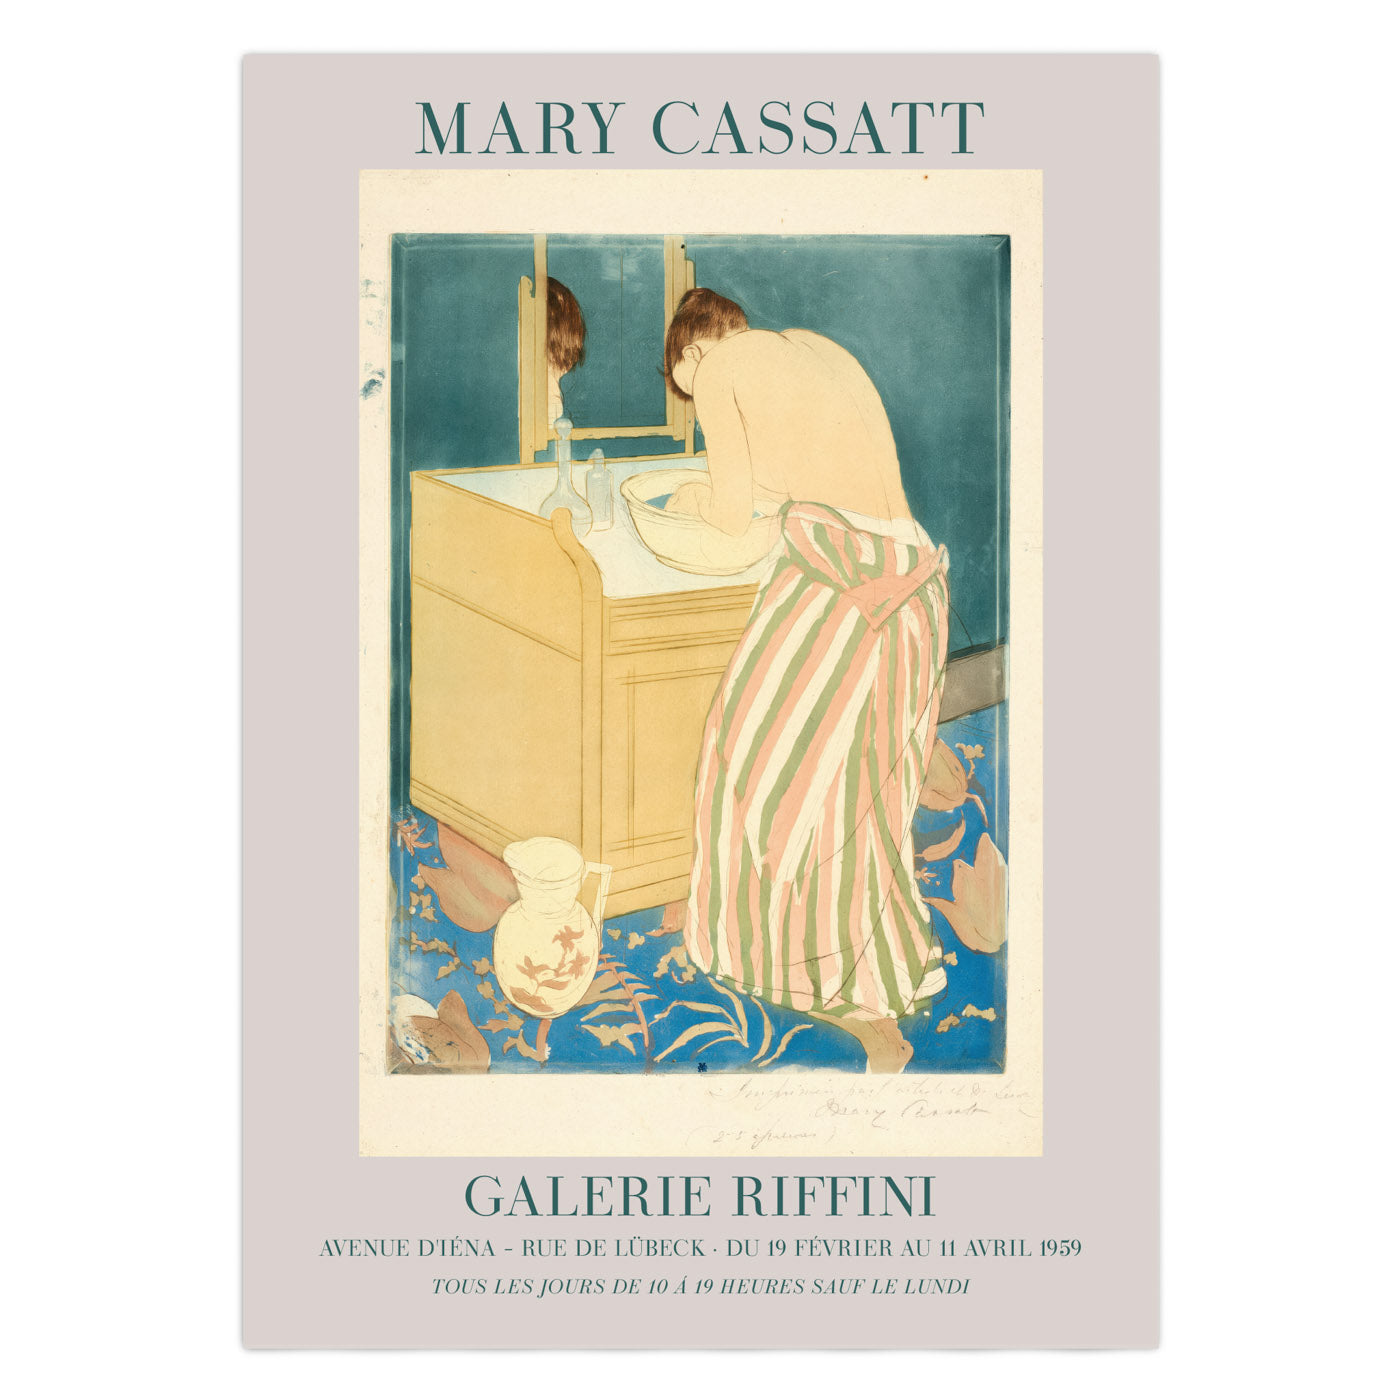 Mary Cassatt Exhibition Poster - 'Woman Bathing (La Toilette)', 1890-91